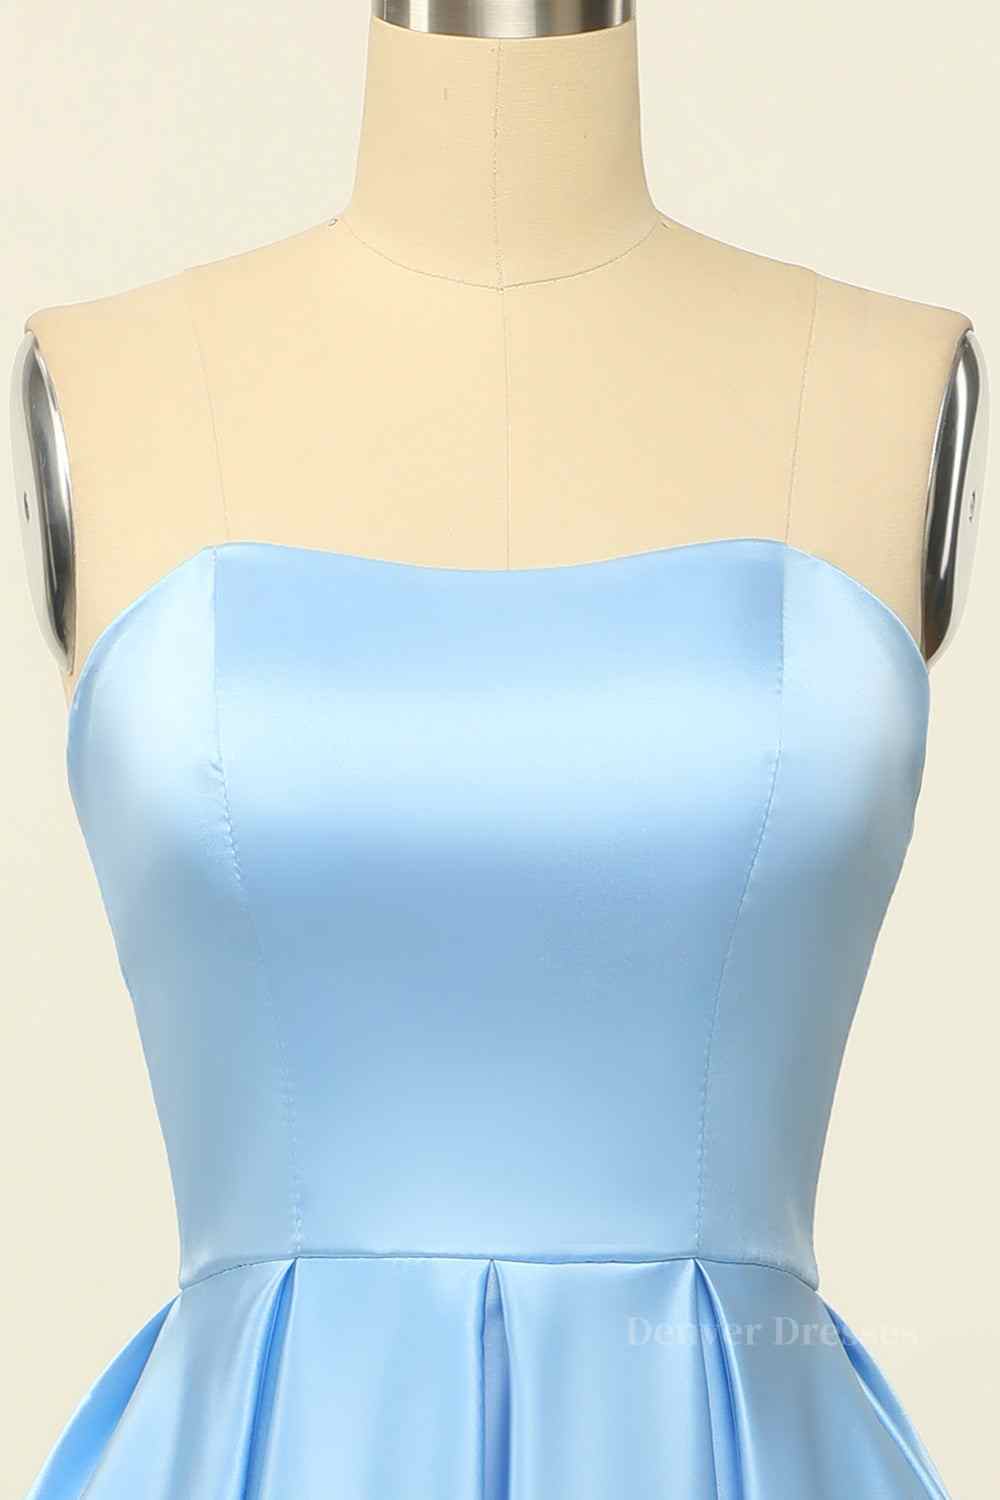 Stunning Dress, Blue A-line Strapless Satin Mini Homecoming Dress